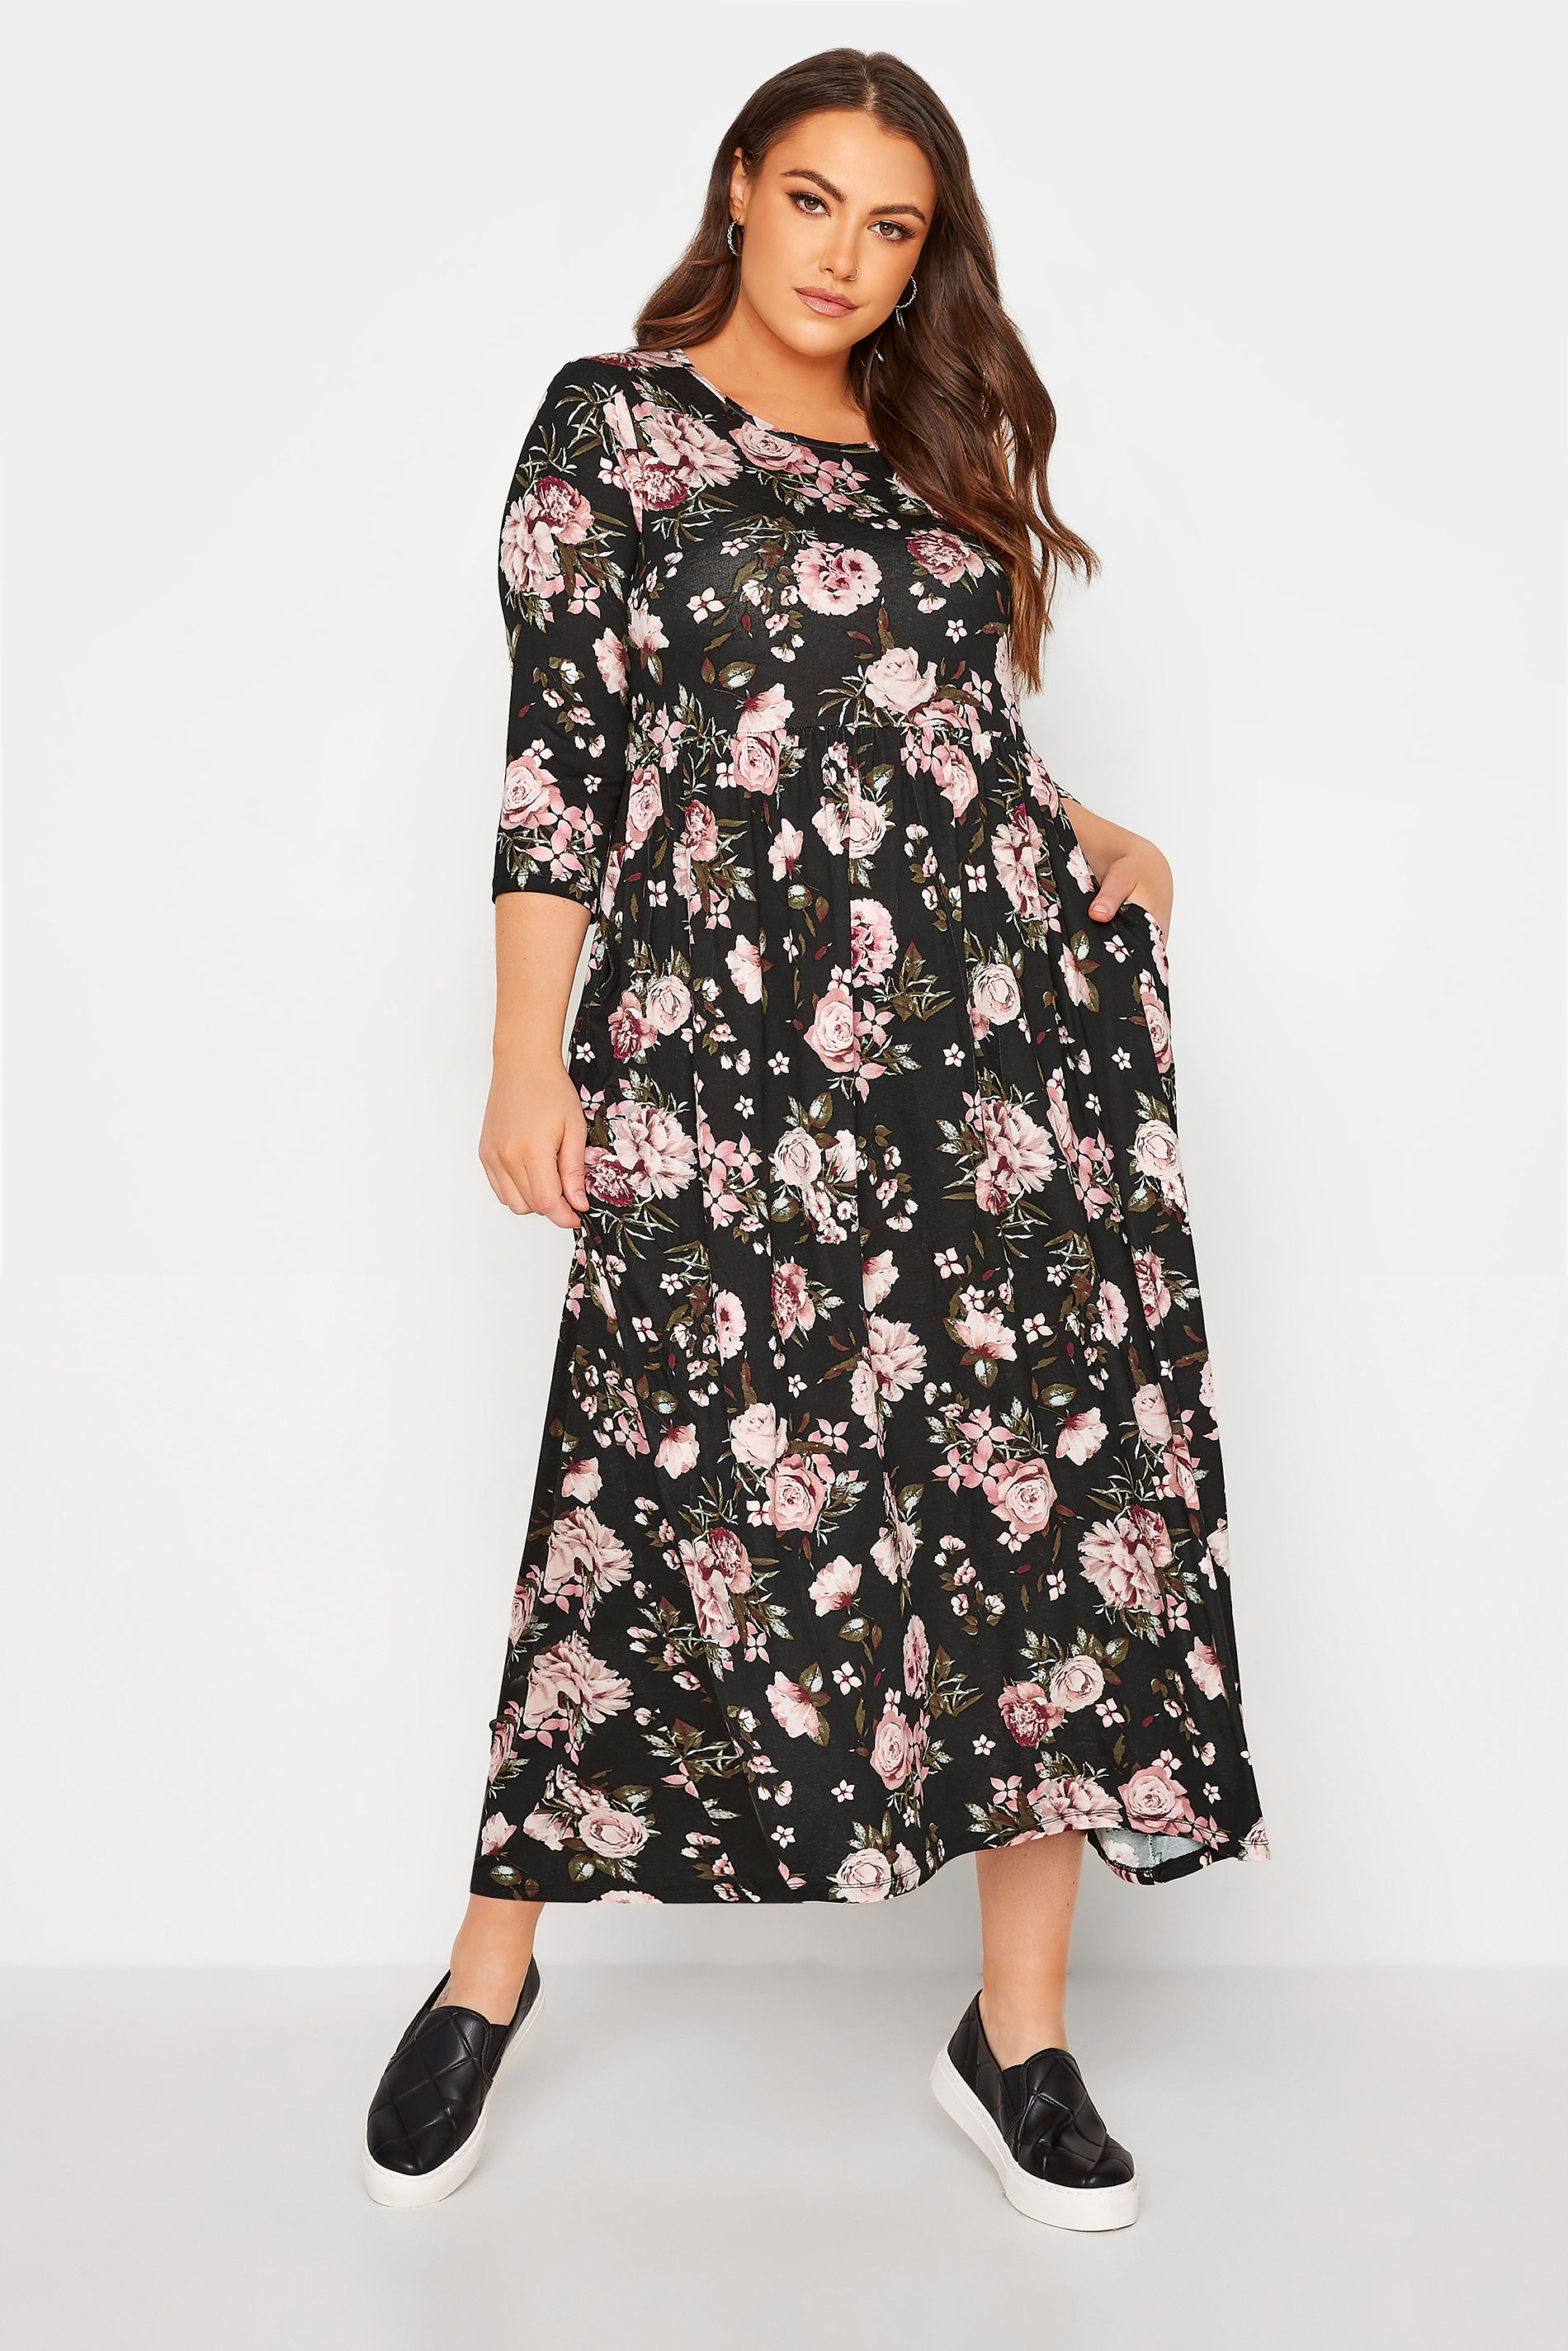 Robes Grande Taille Grande taille  Robes Imprimé Floral | Robe Midi Noire Floral Rose en Jersey - HB11990